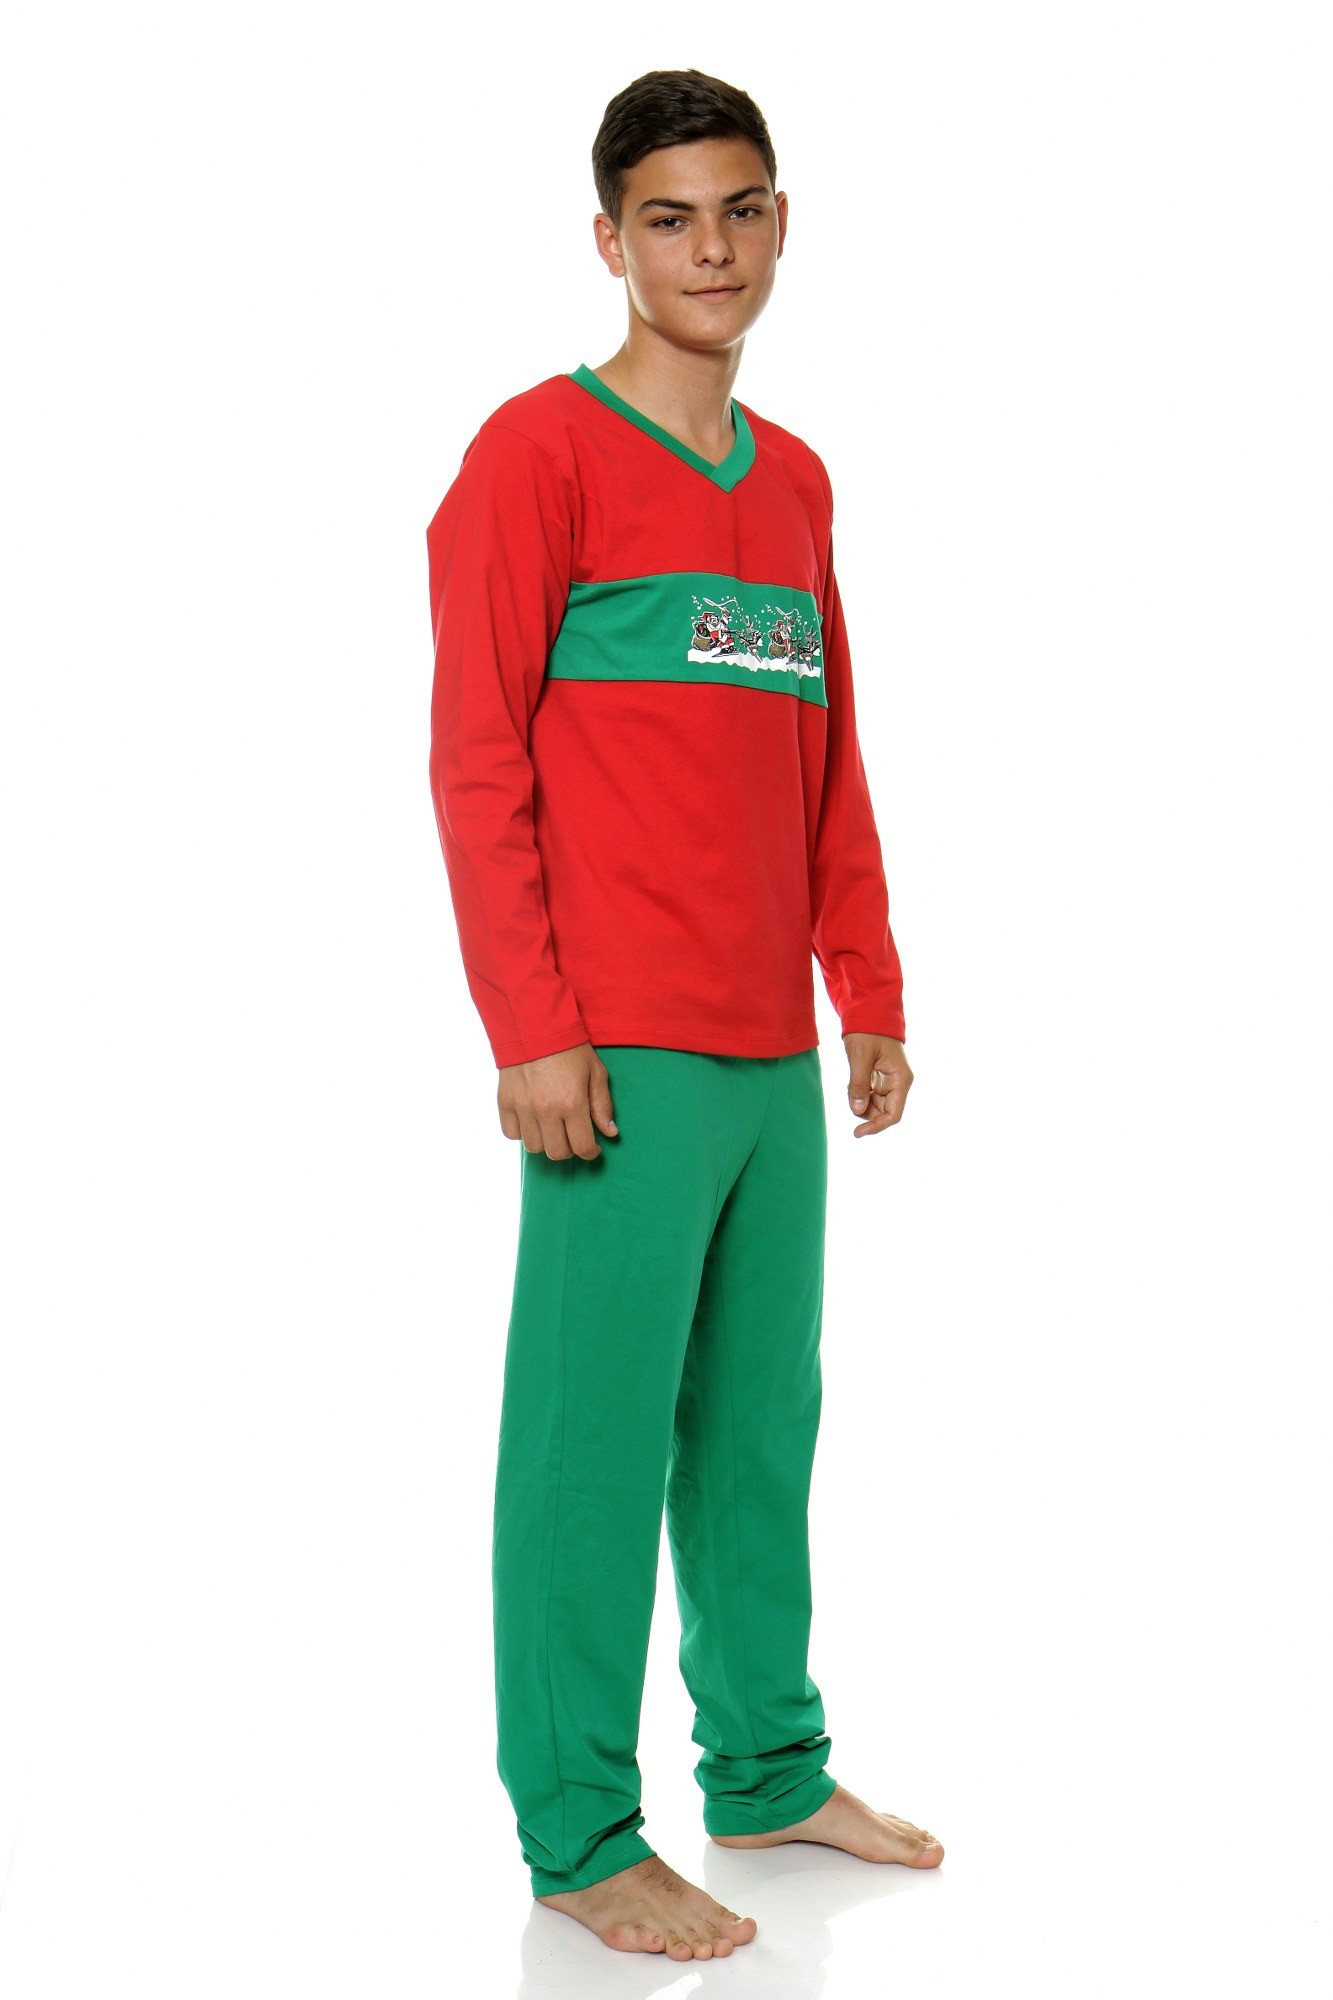 Pijama rosu-verde cu imprimeu Mos Craciun